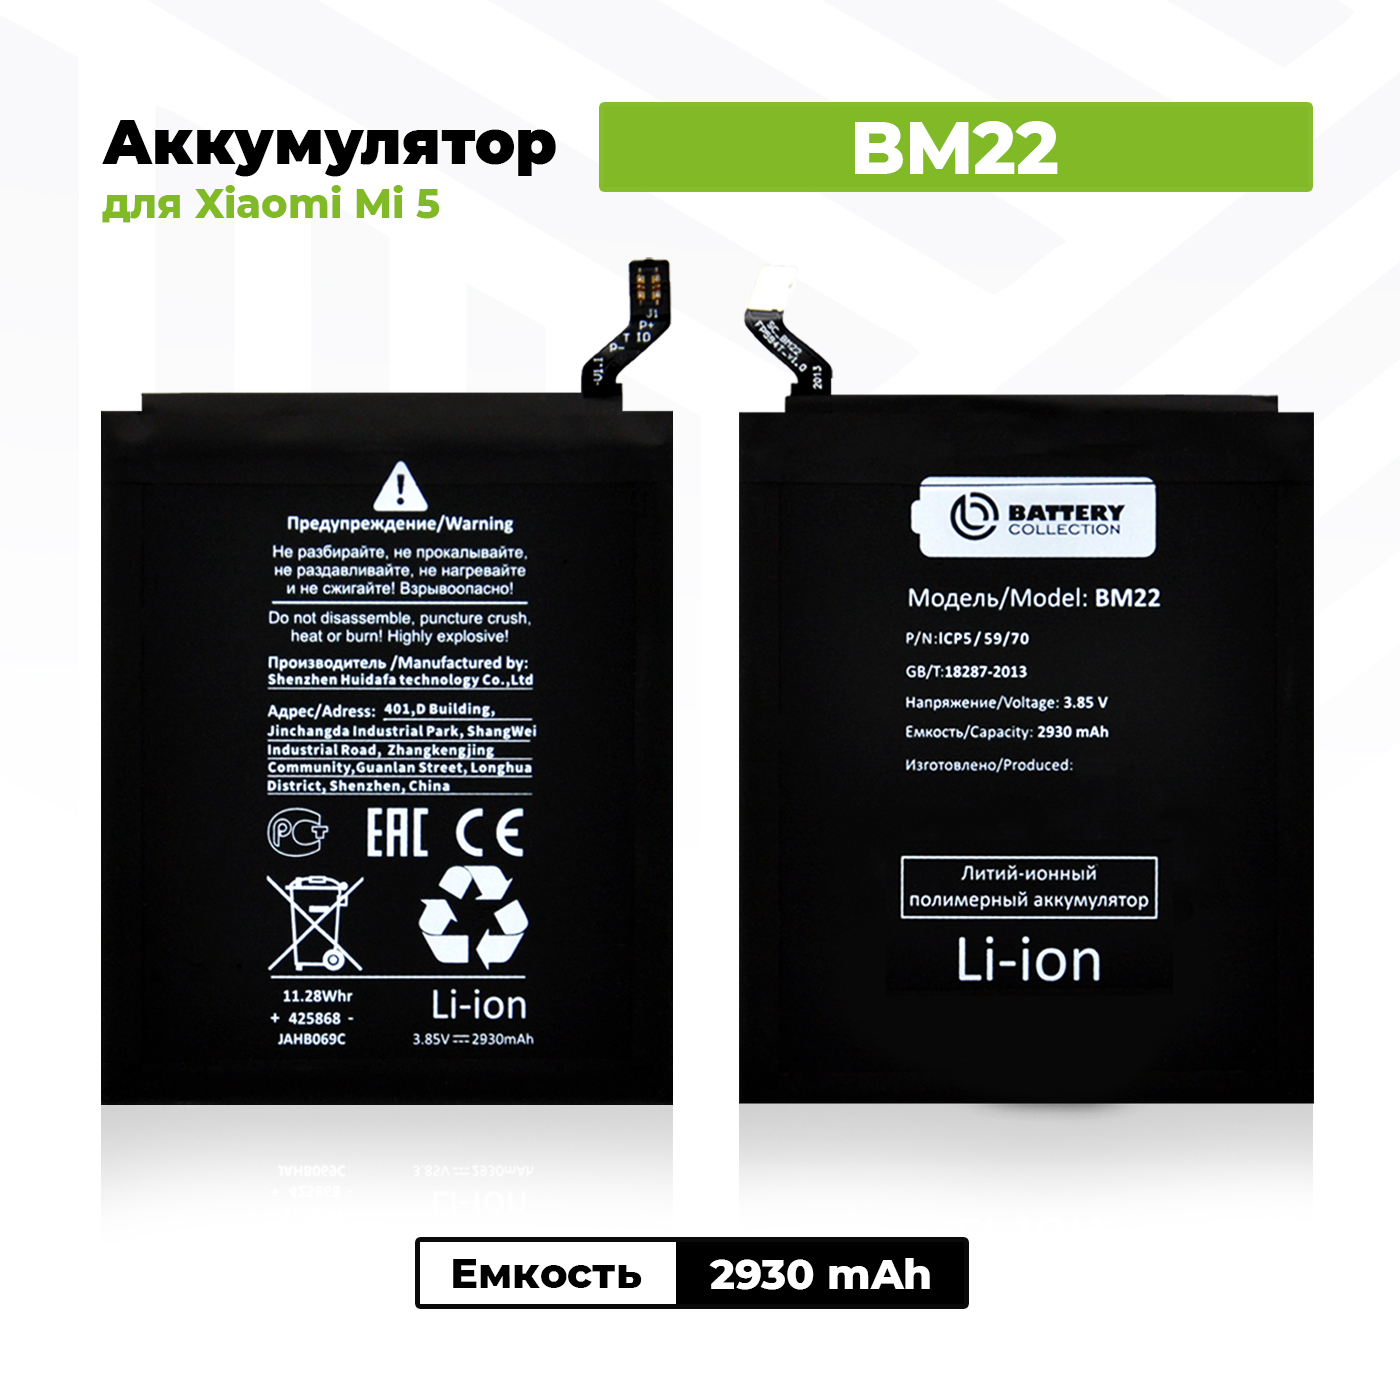 Bm22 аккумулятор. Bm52 аккумулятор. Батарейка bm5g. Battery collection чехлы для Xiaomi. Battery collection